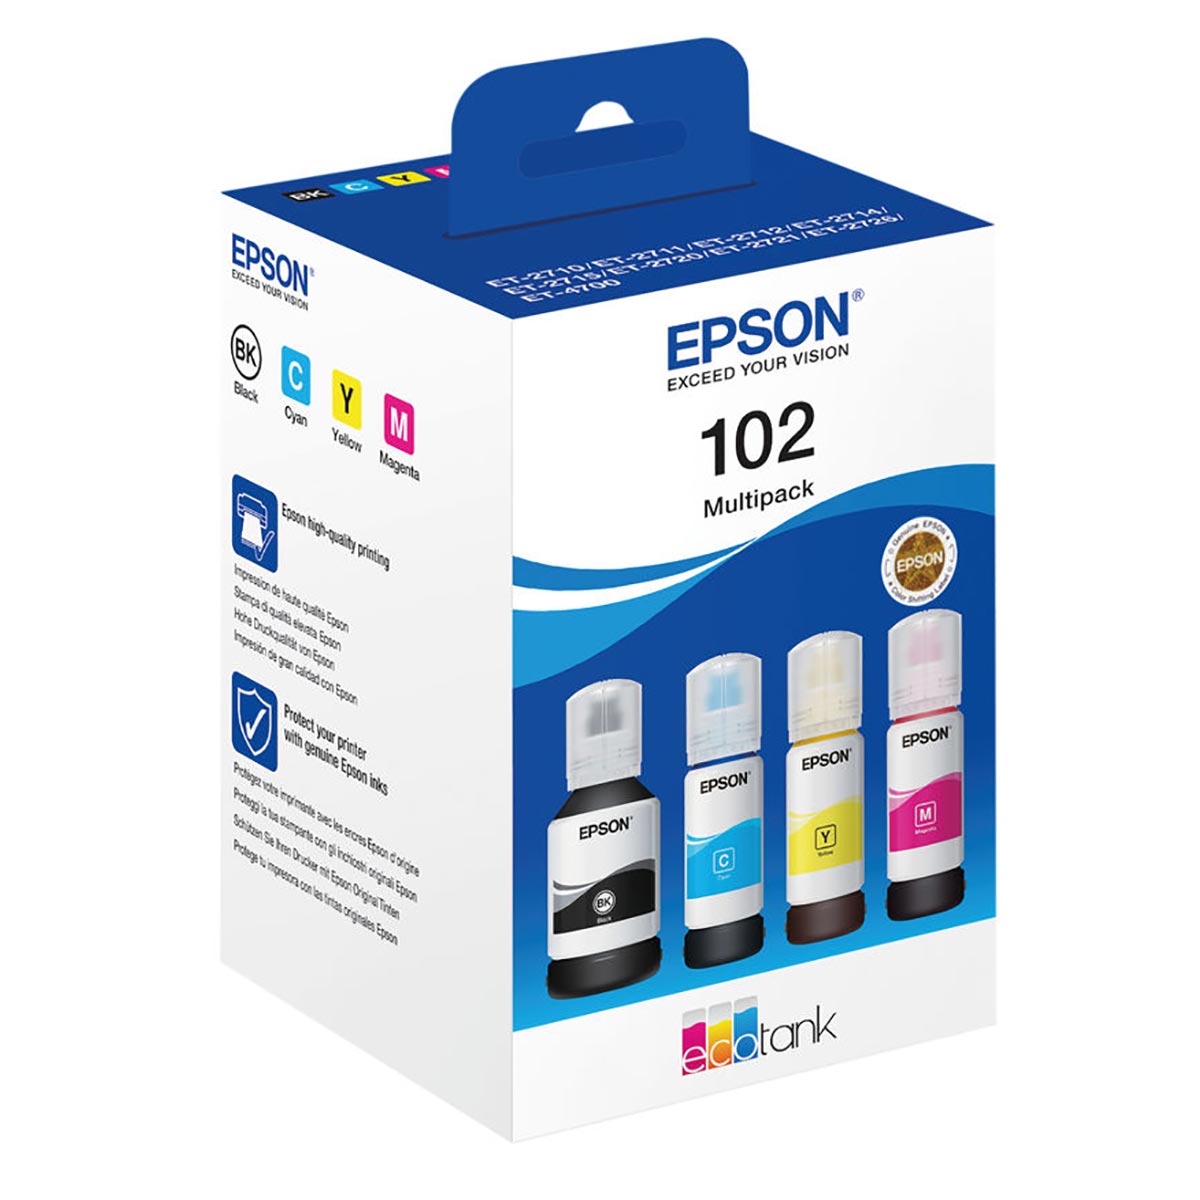 Epson 603 cartouches d'encre multipack, cyan, magenta, jaune